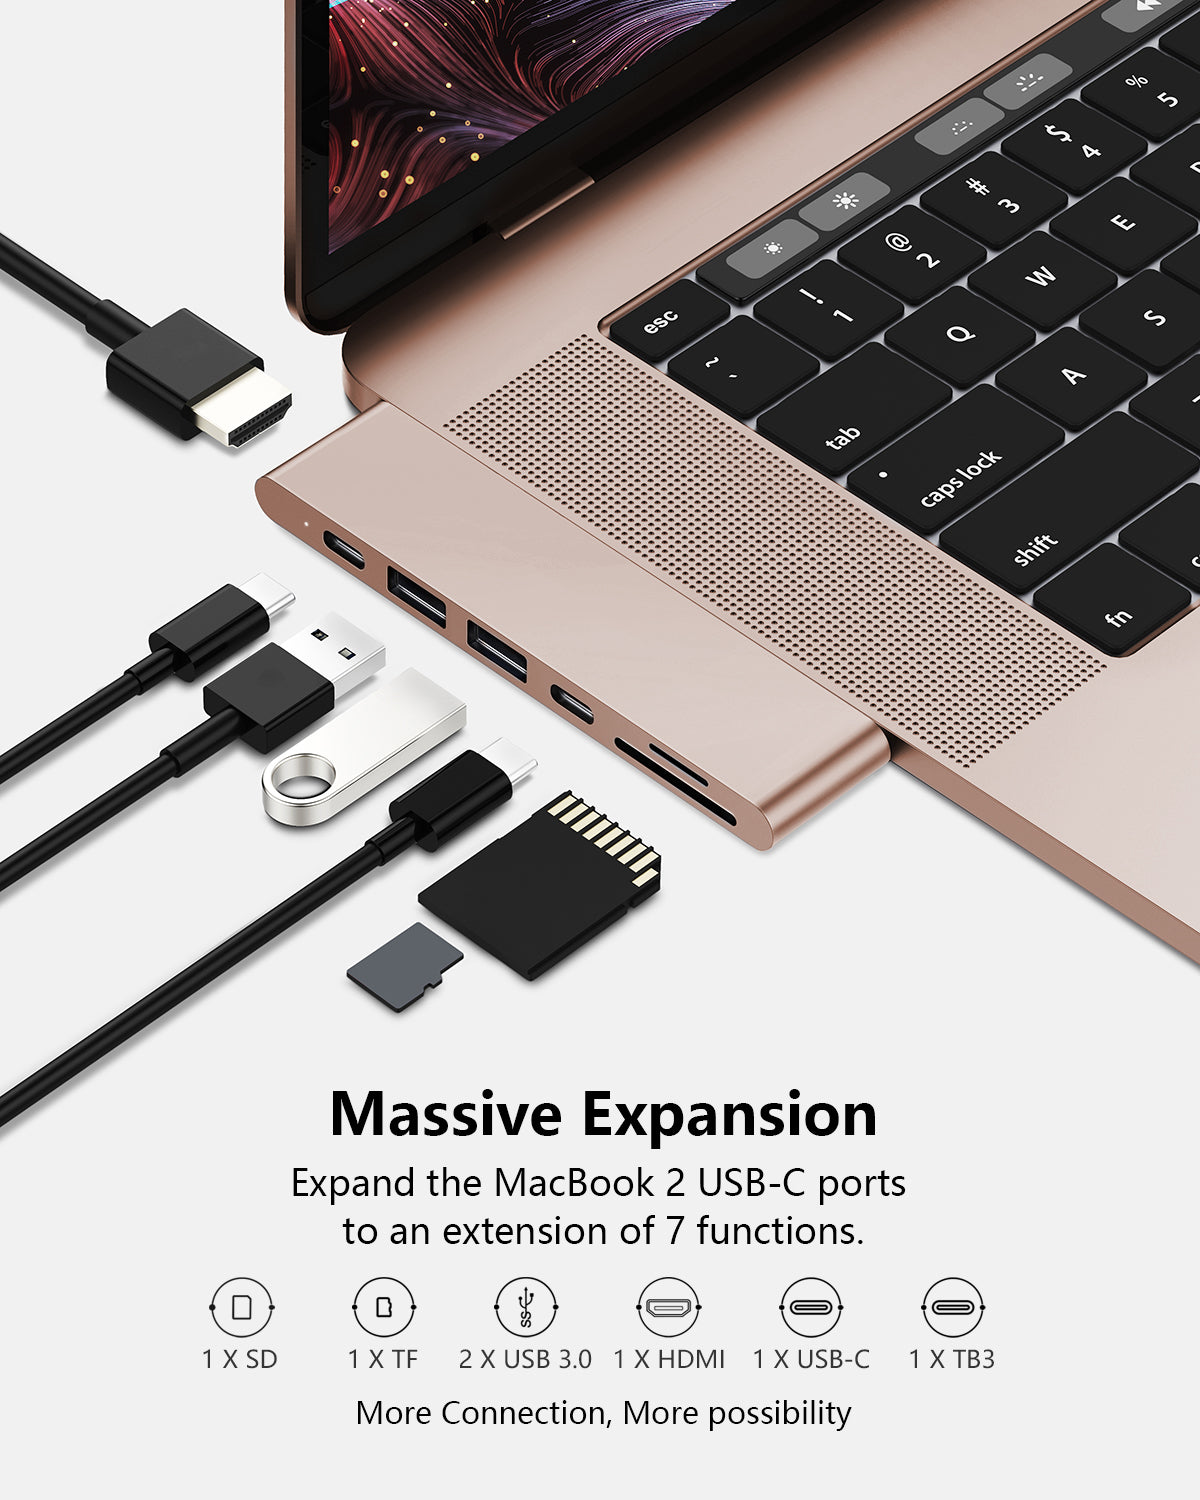 7-in-2 USB C Hub for MacBook (Rose Gold)